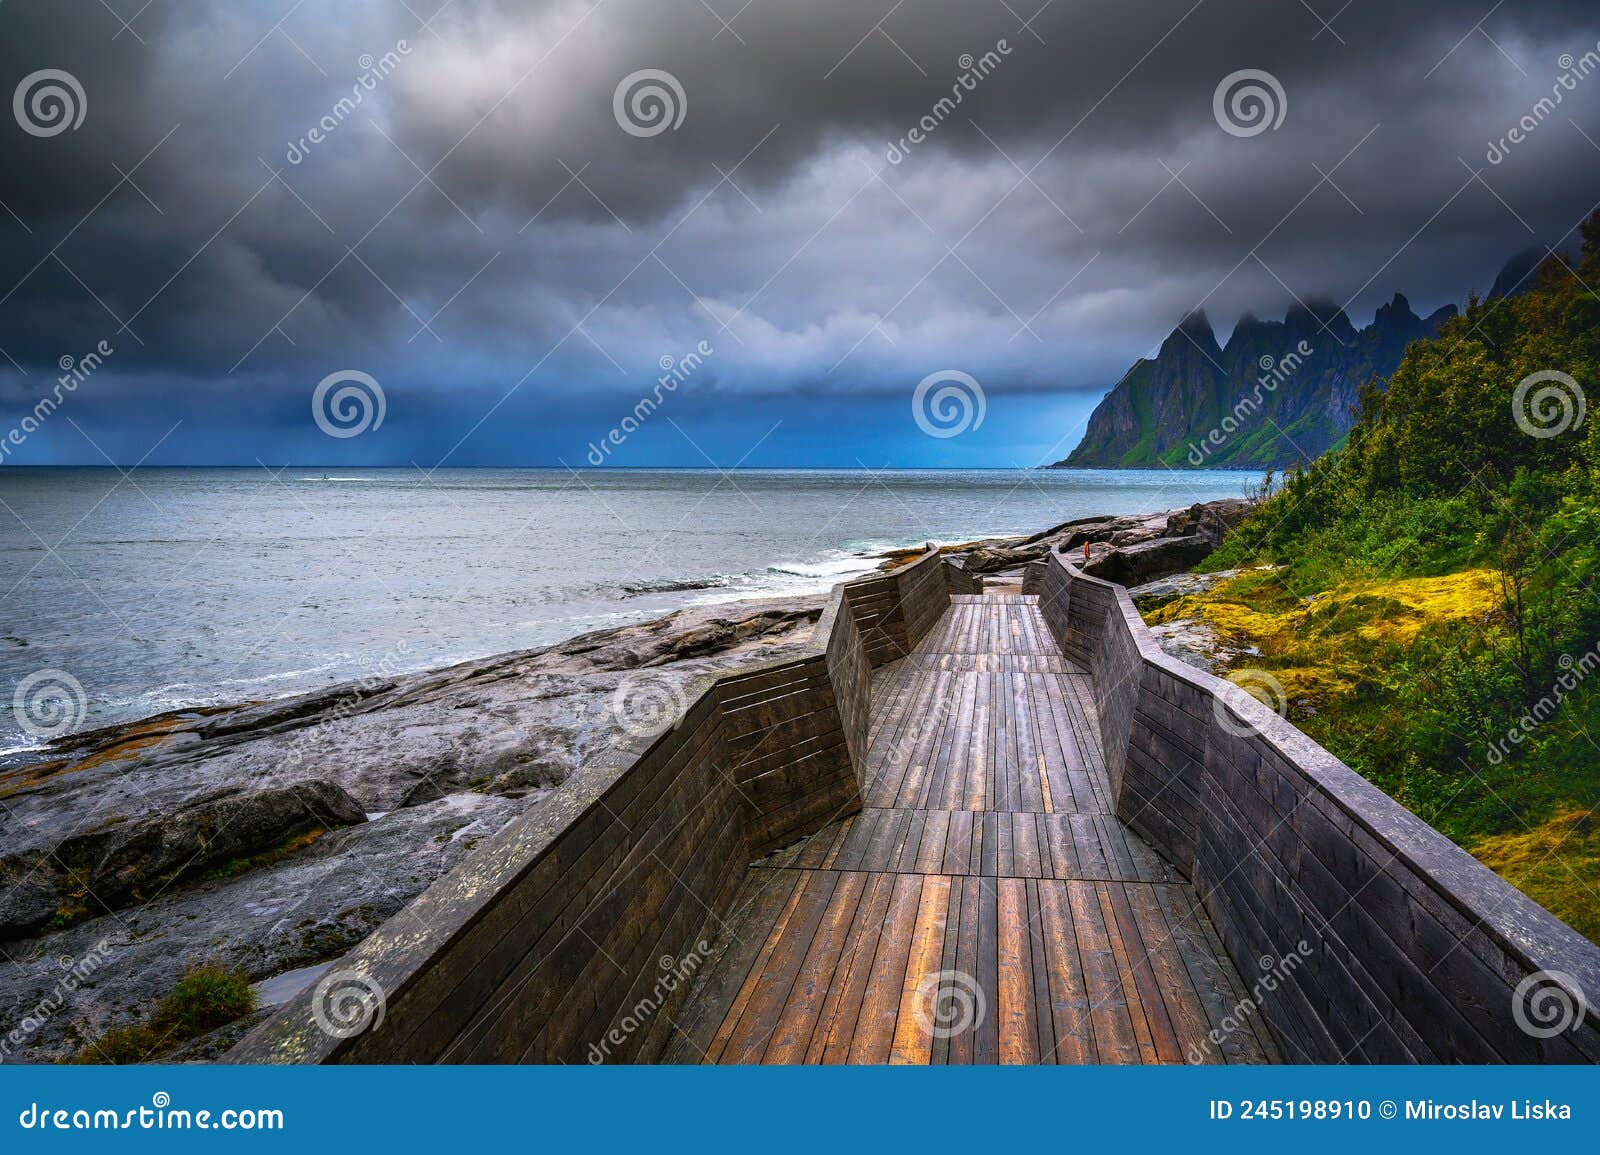 wooden boardwalk at tungeneset beach on senja island in northern norway